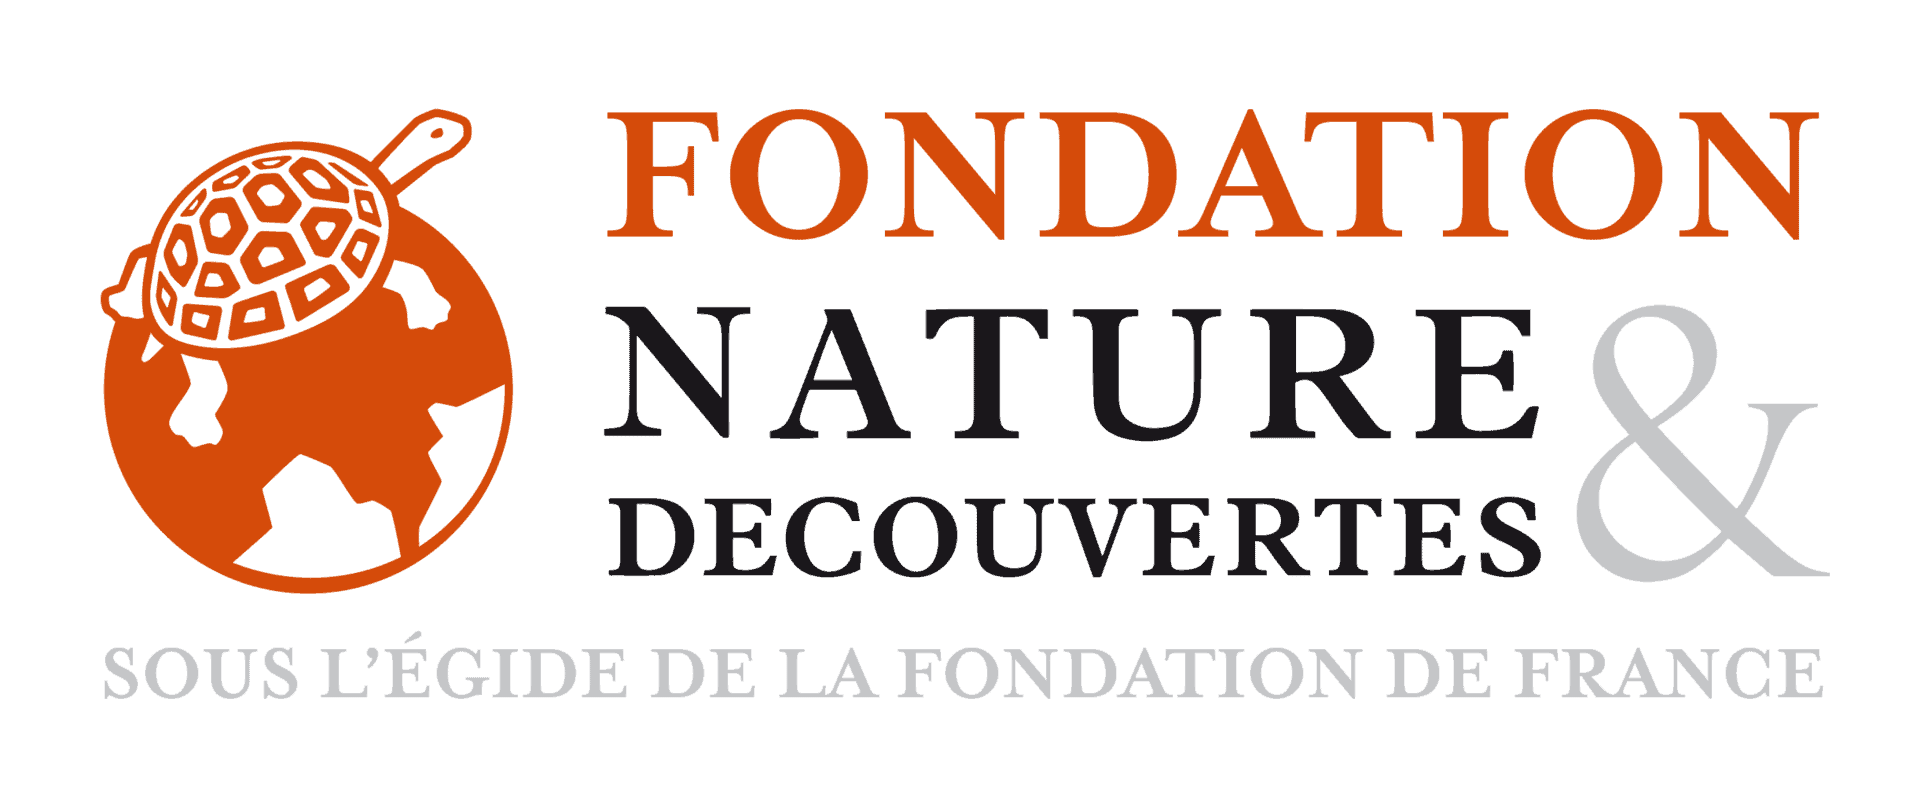 logo_fondation_Nature_decouverte